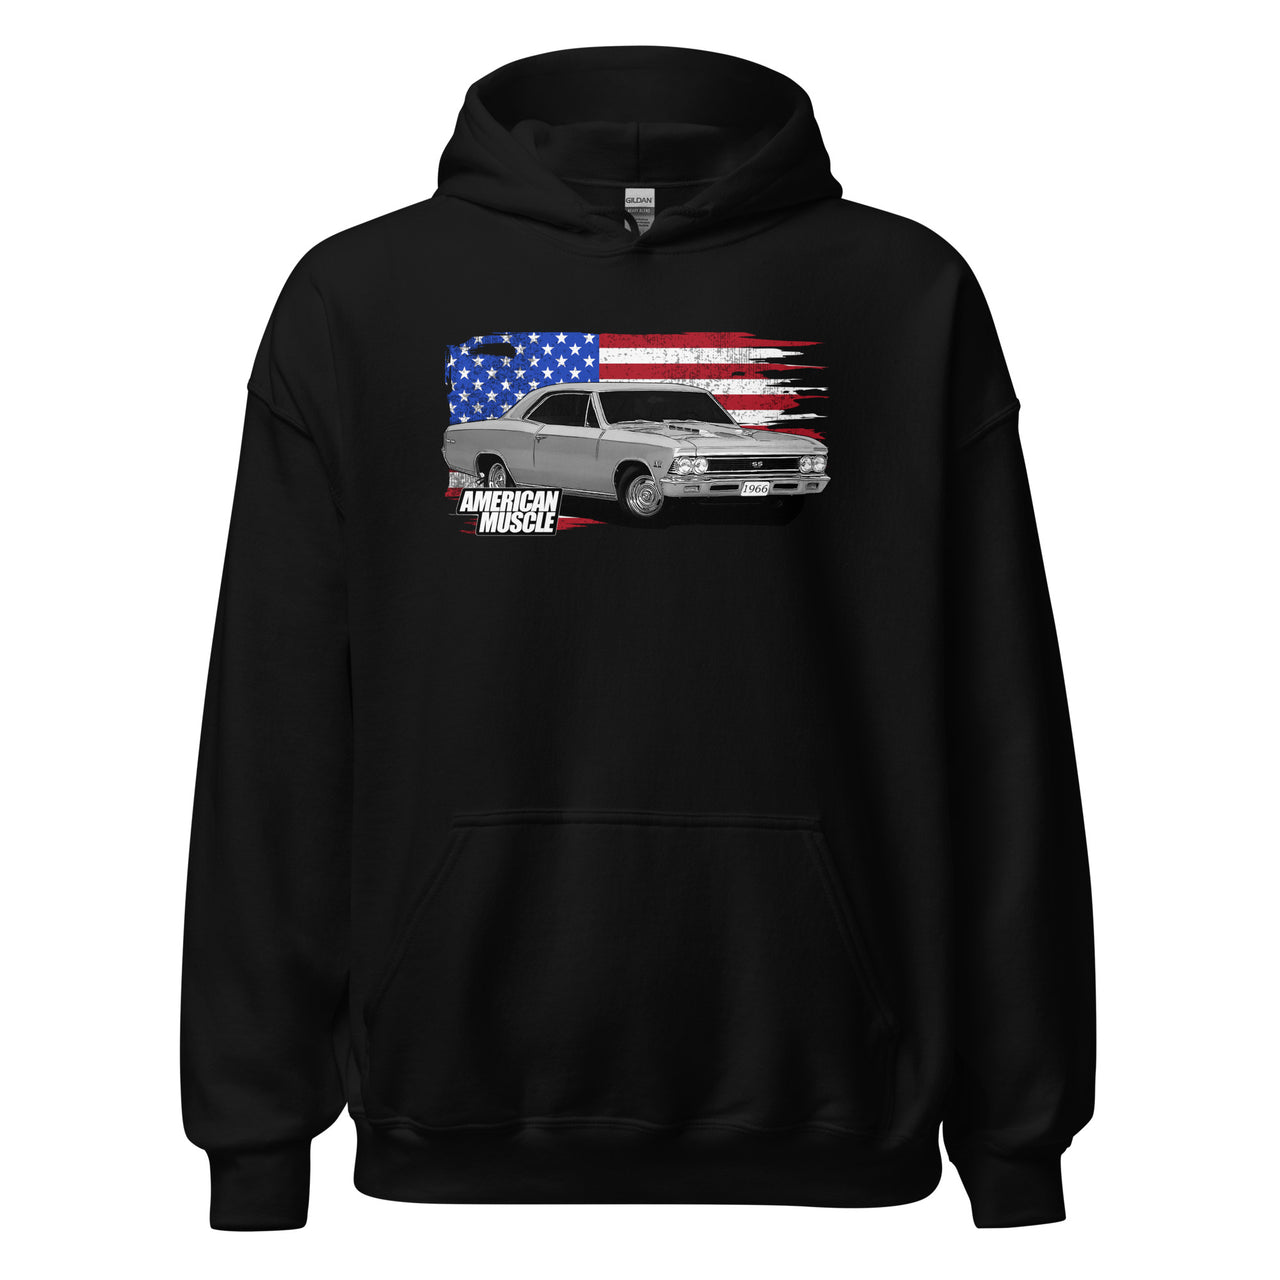 1966 Chevelle Car Hoodie Sweatshirt With American Flag design - in black